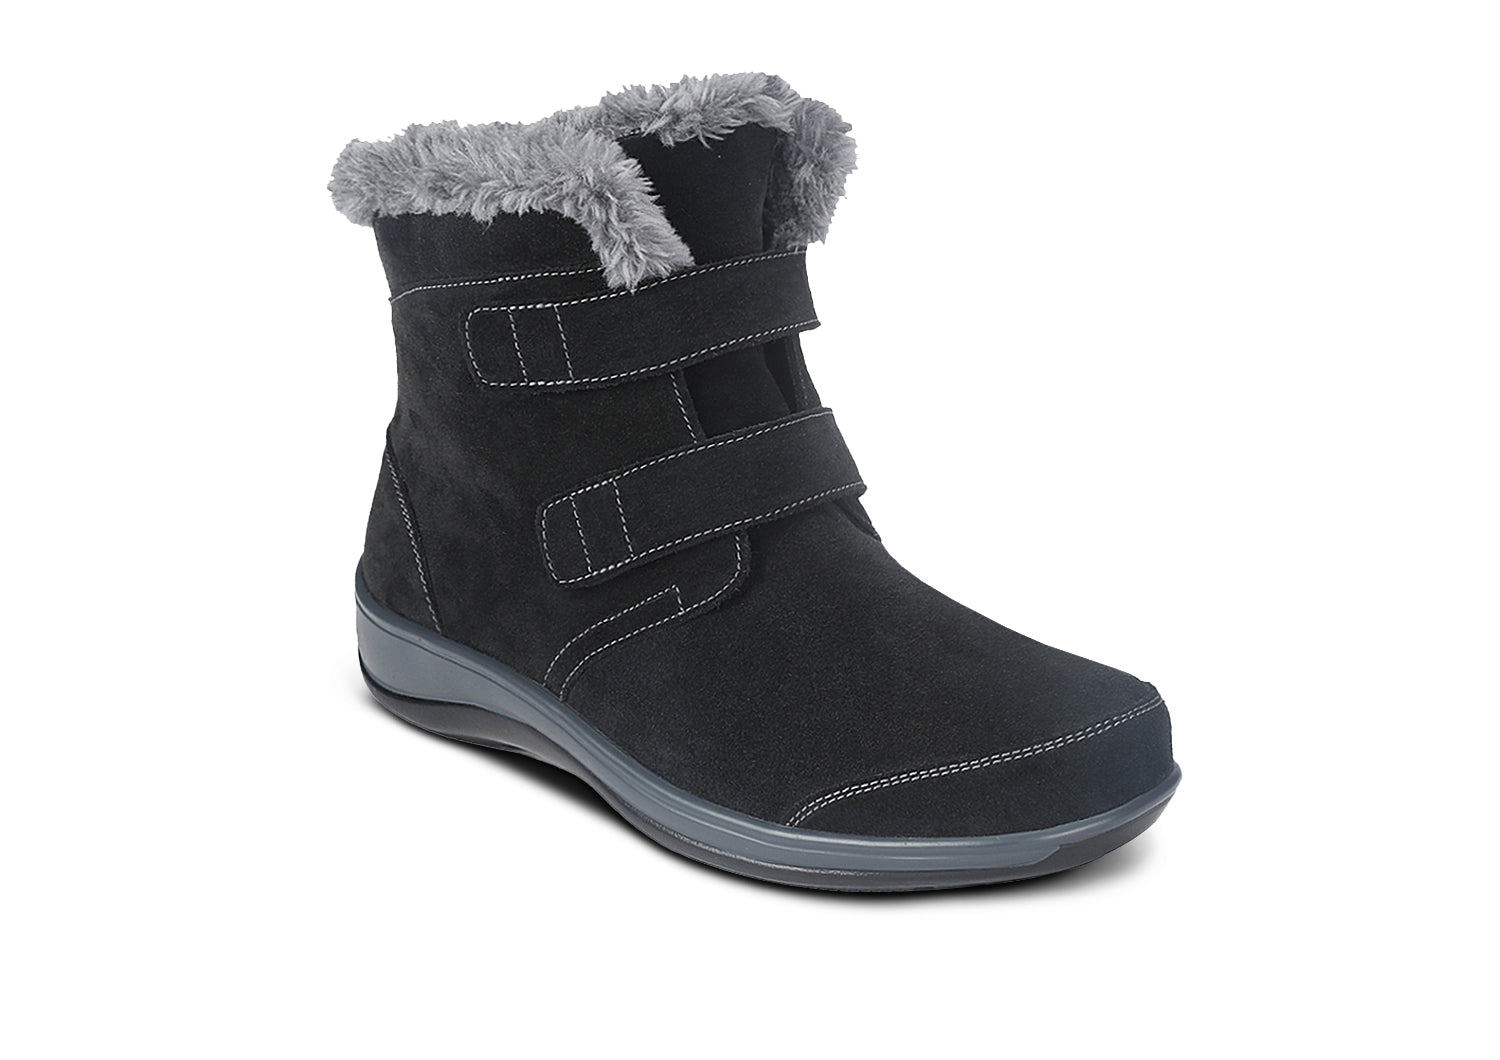 Carolyn, Tan | 12'' Women's Winter Boots | Removable Felt